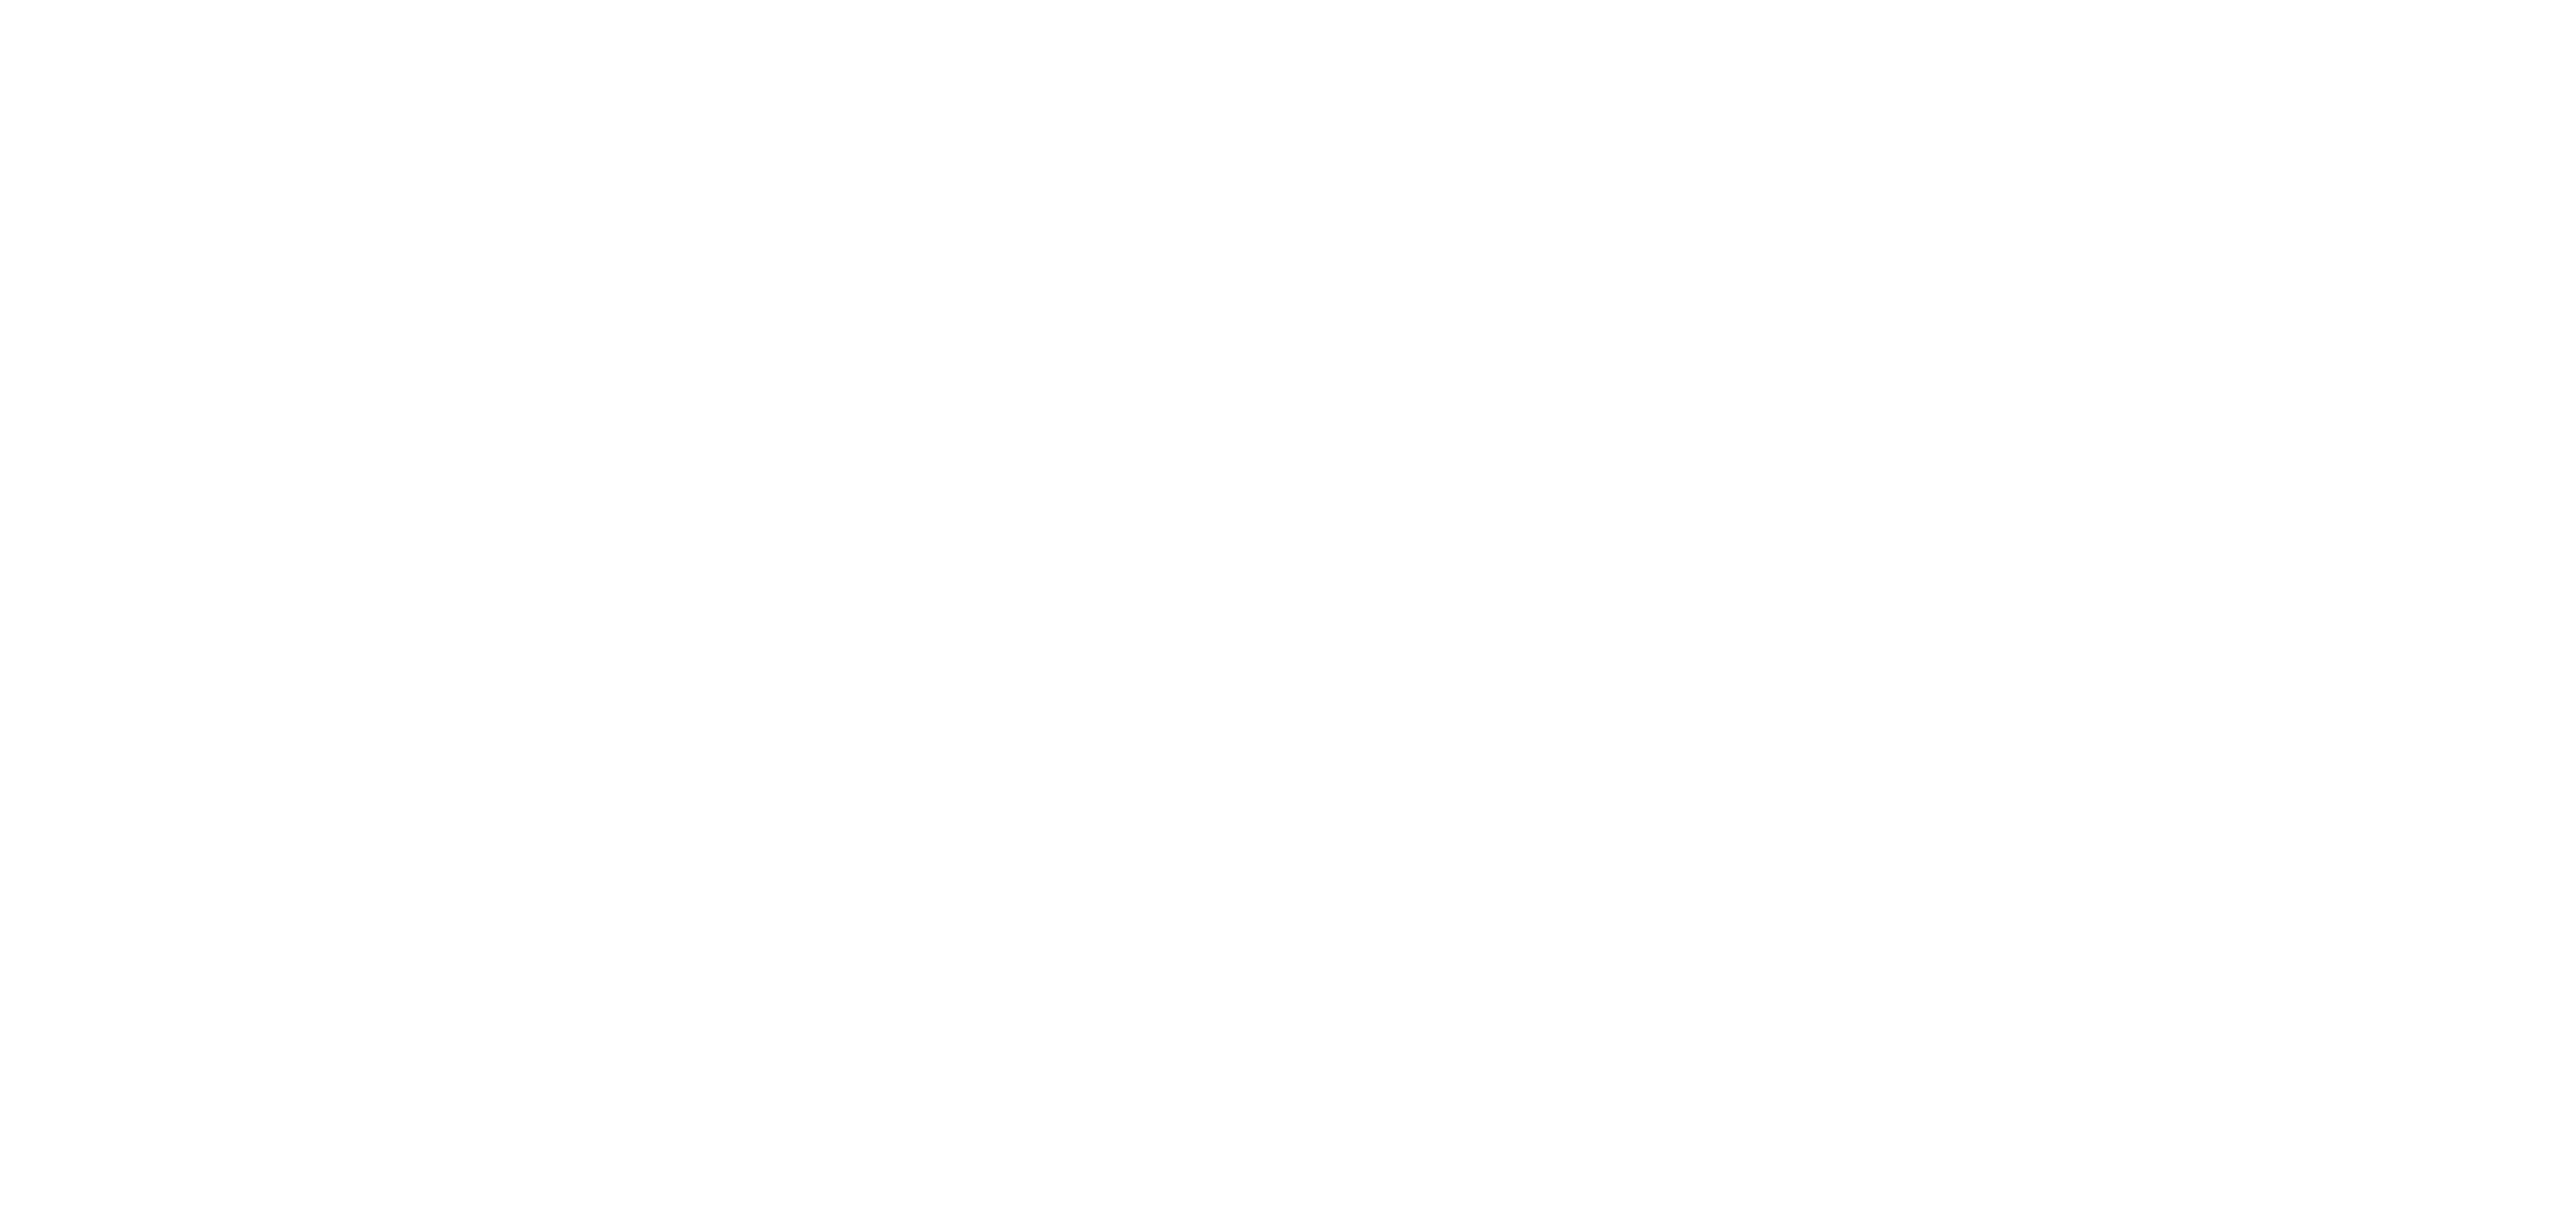 Vintage Prime & Seafood logo